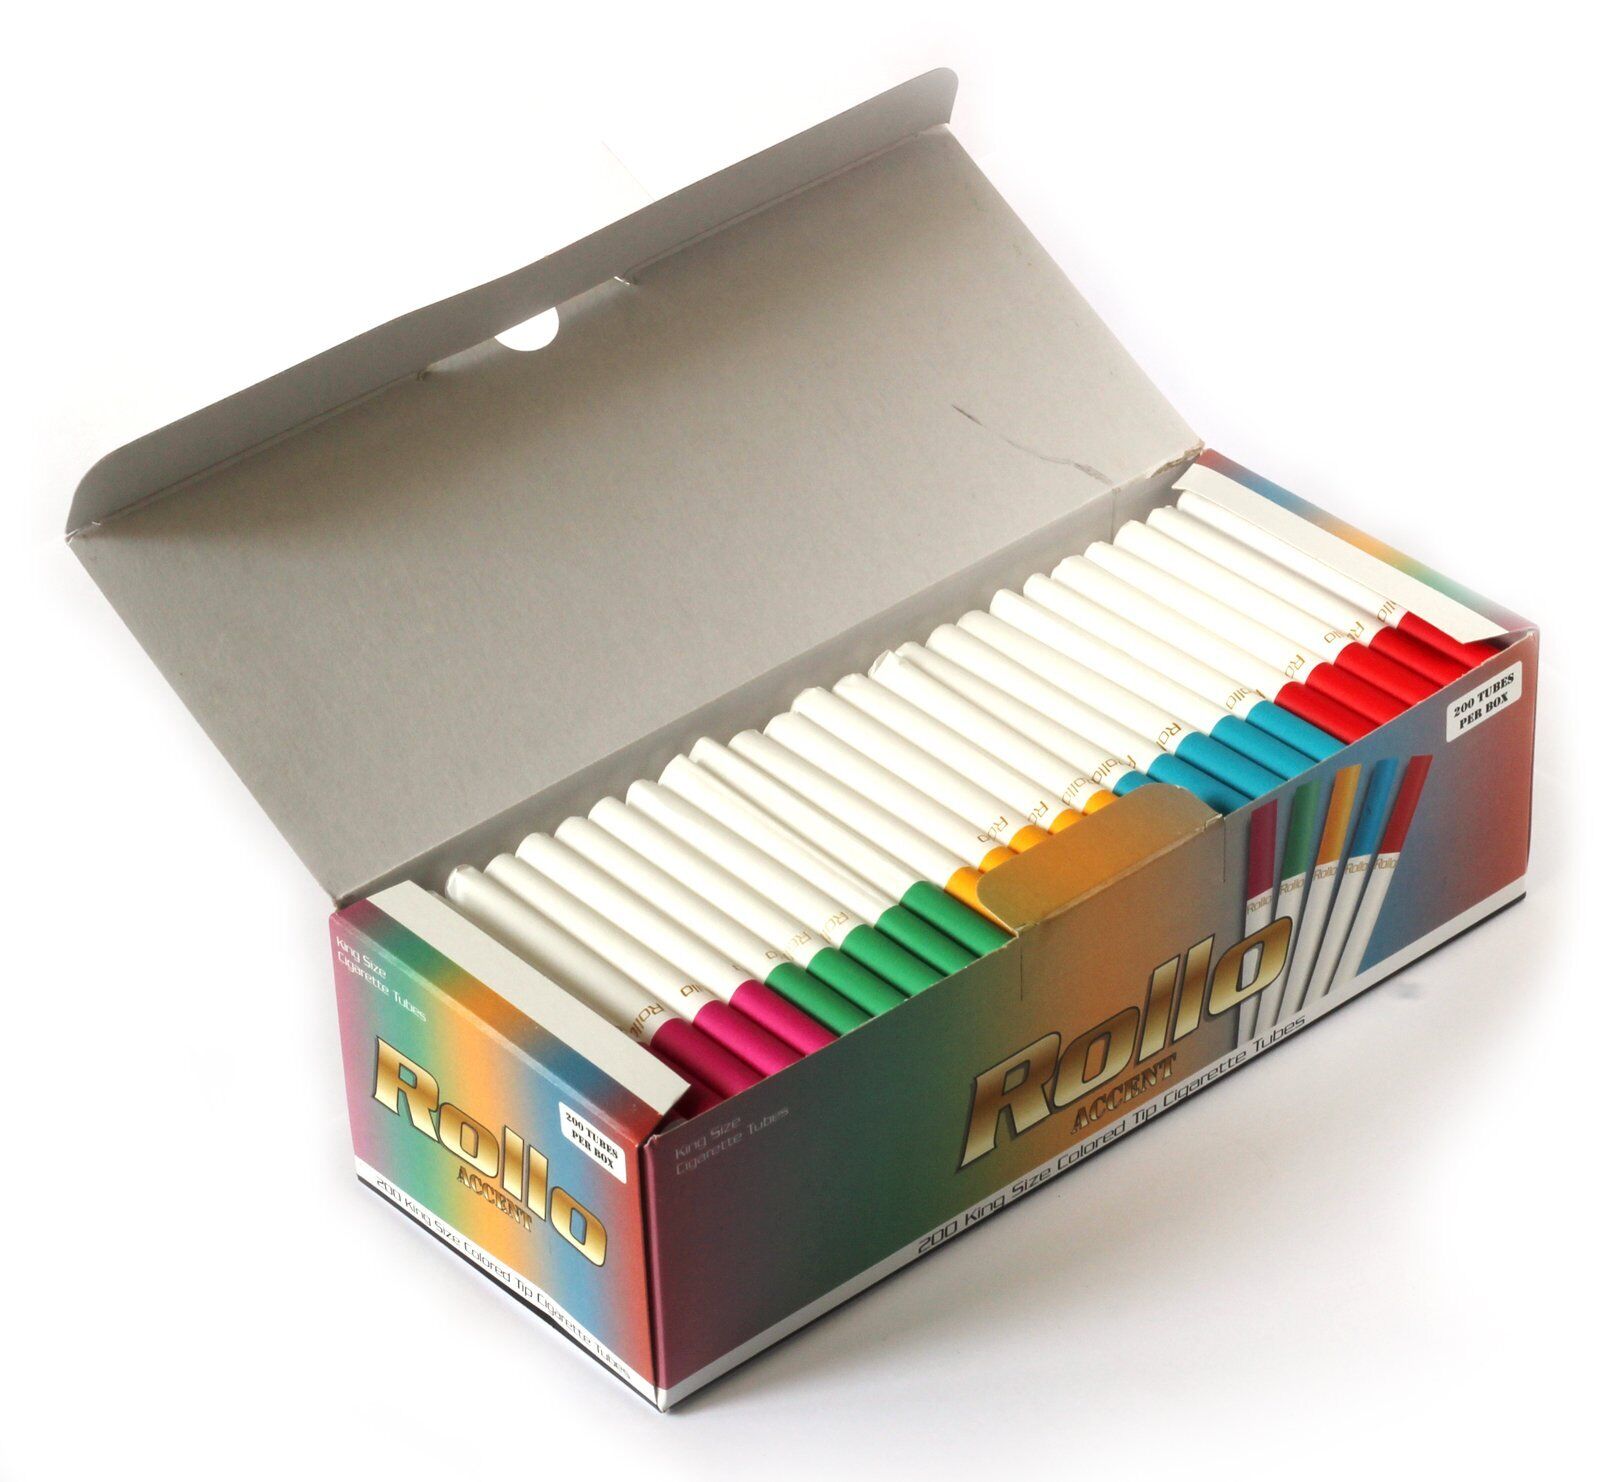 ROLLO ACCENT - Cigarette tubes with multi colored filters - 200 tubes per box